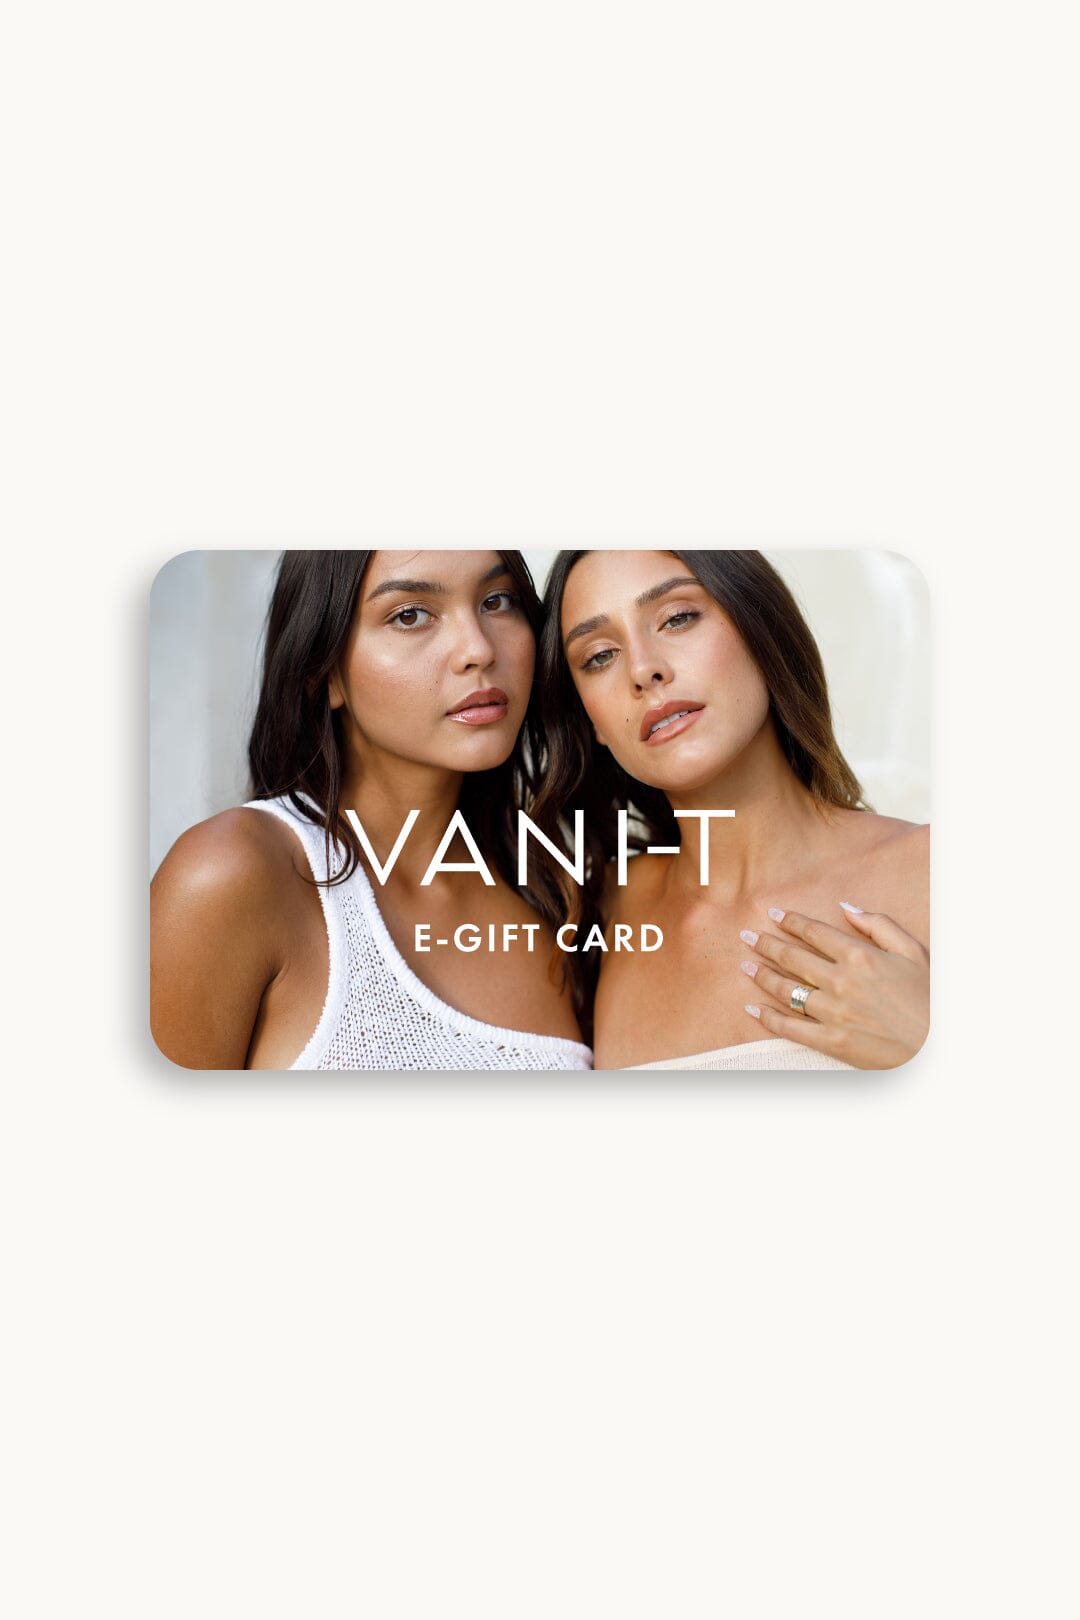 VANI-T Gift Card